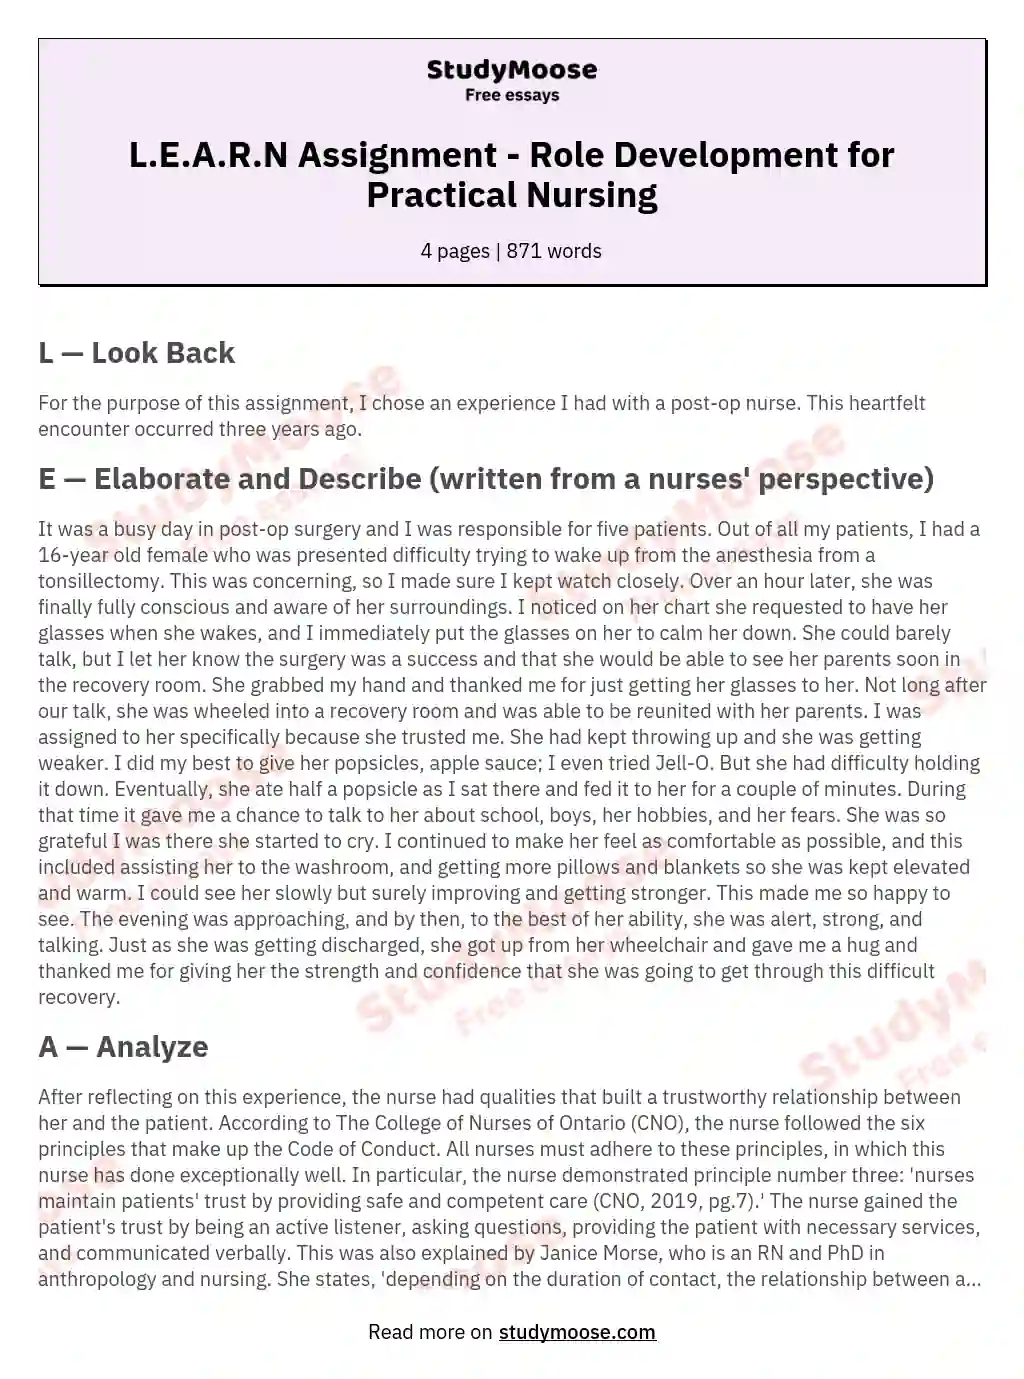 L.E.A.R.N Assignment - Role Development for Practical Nursing essay